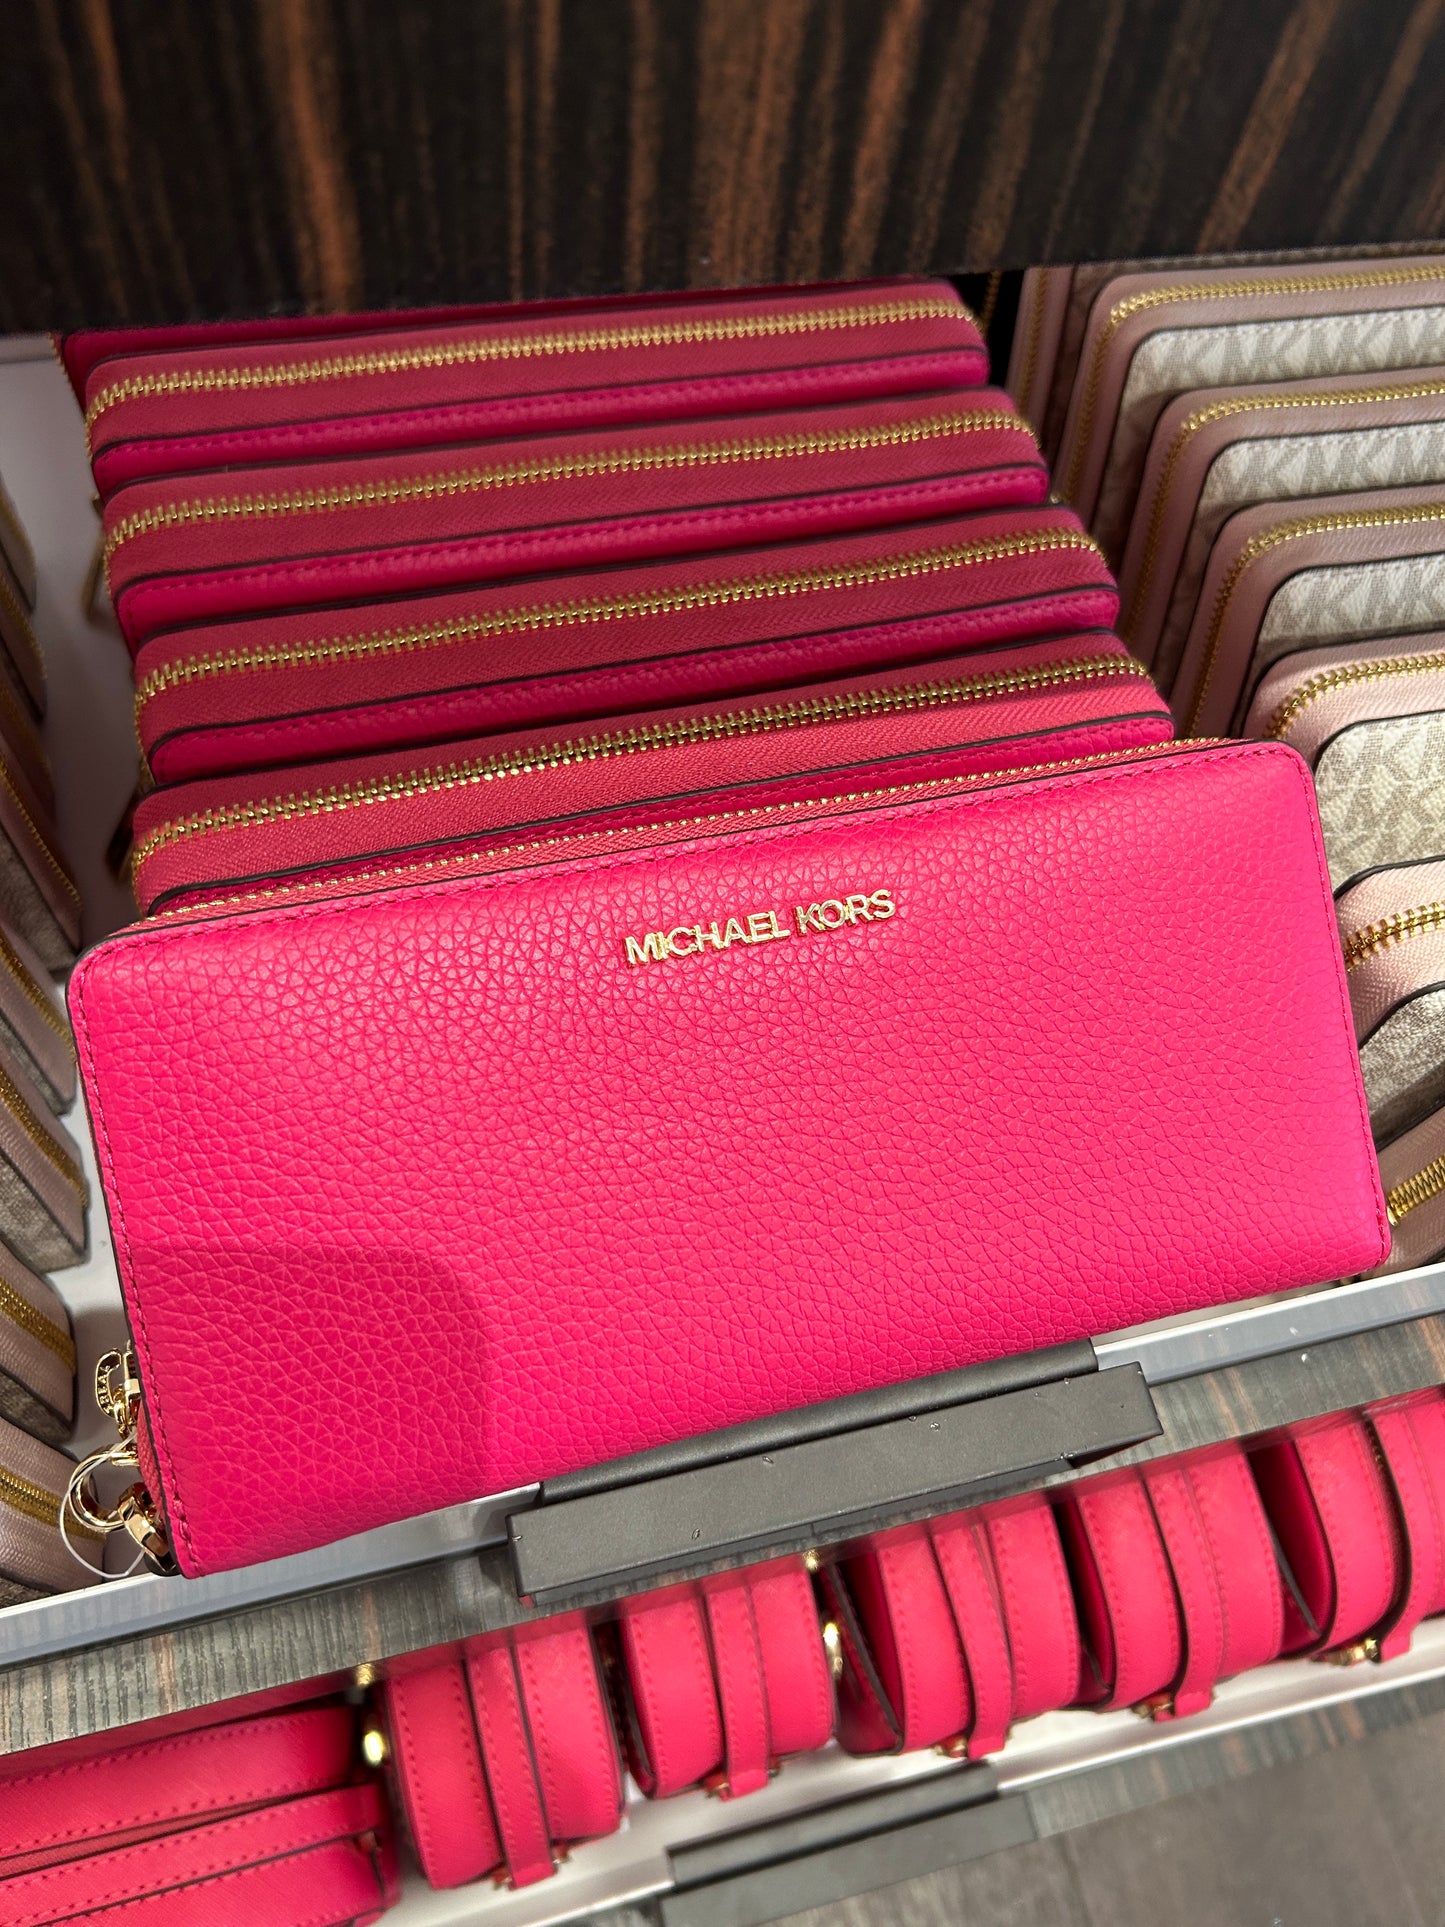 Michael Kors Jet Set Travel Xl Wallet In Electric Pink